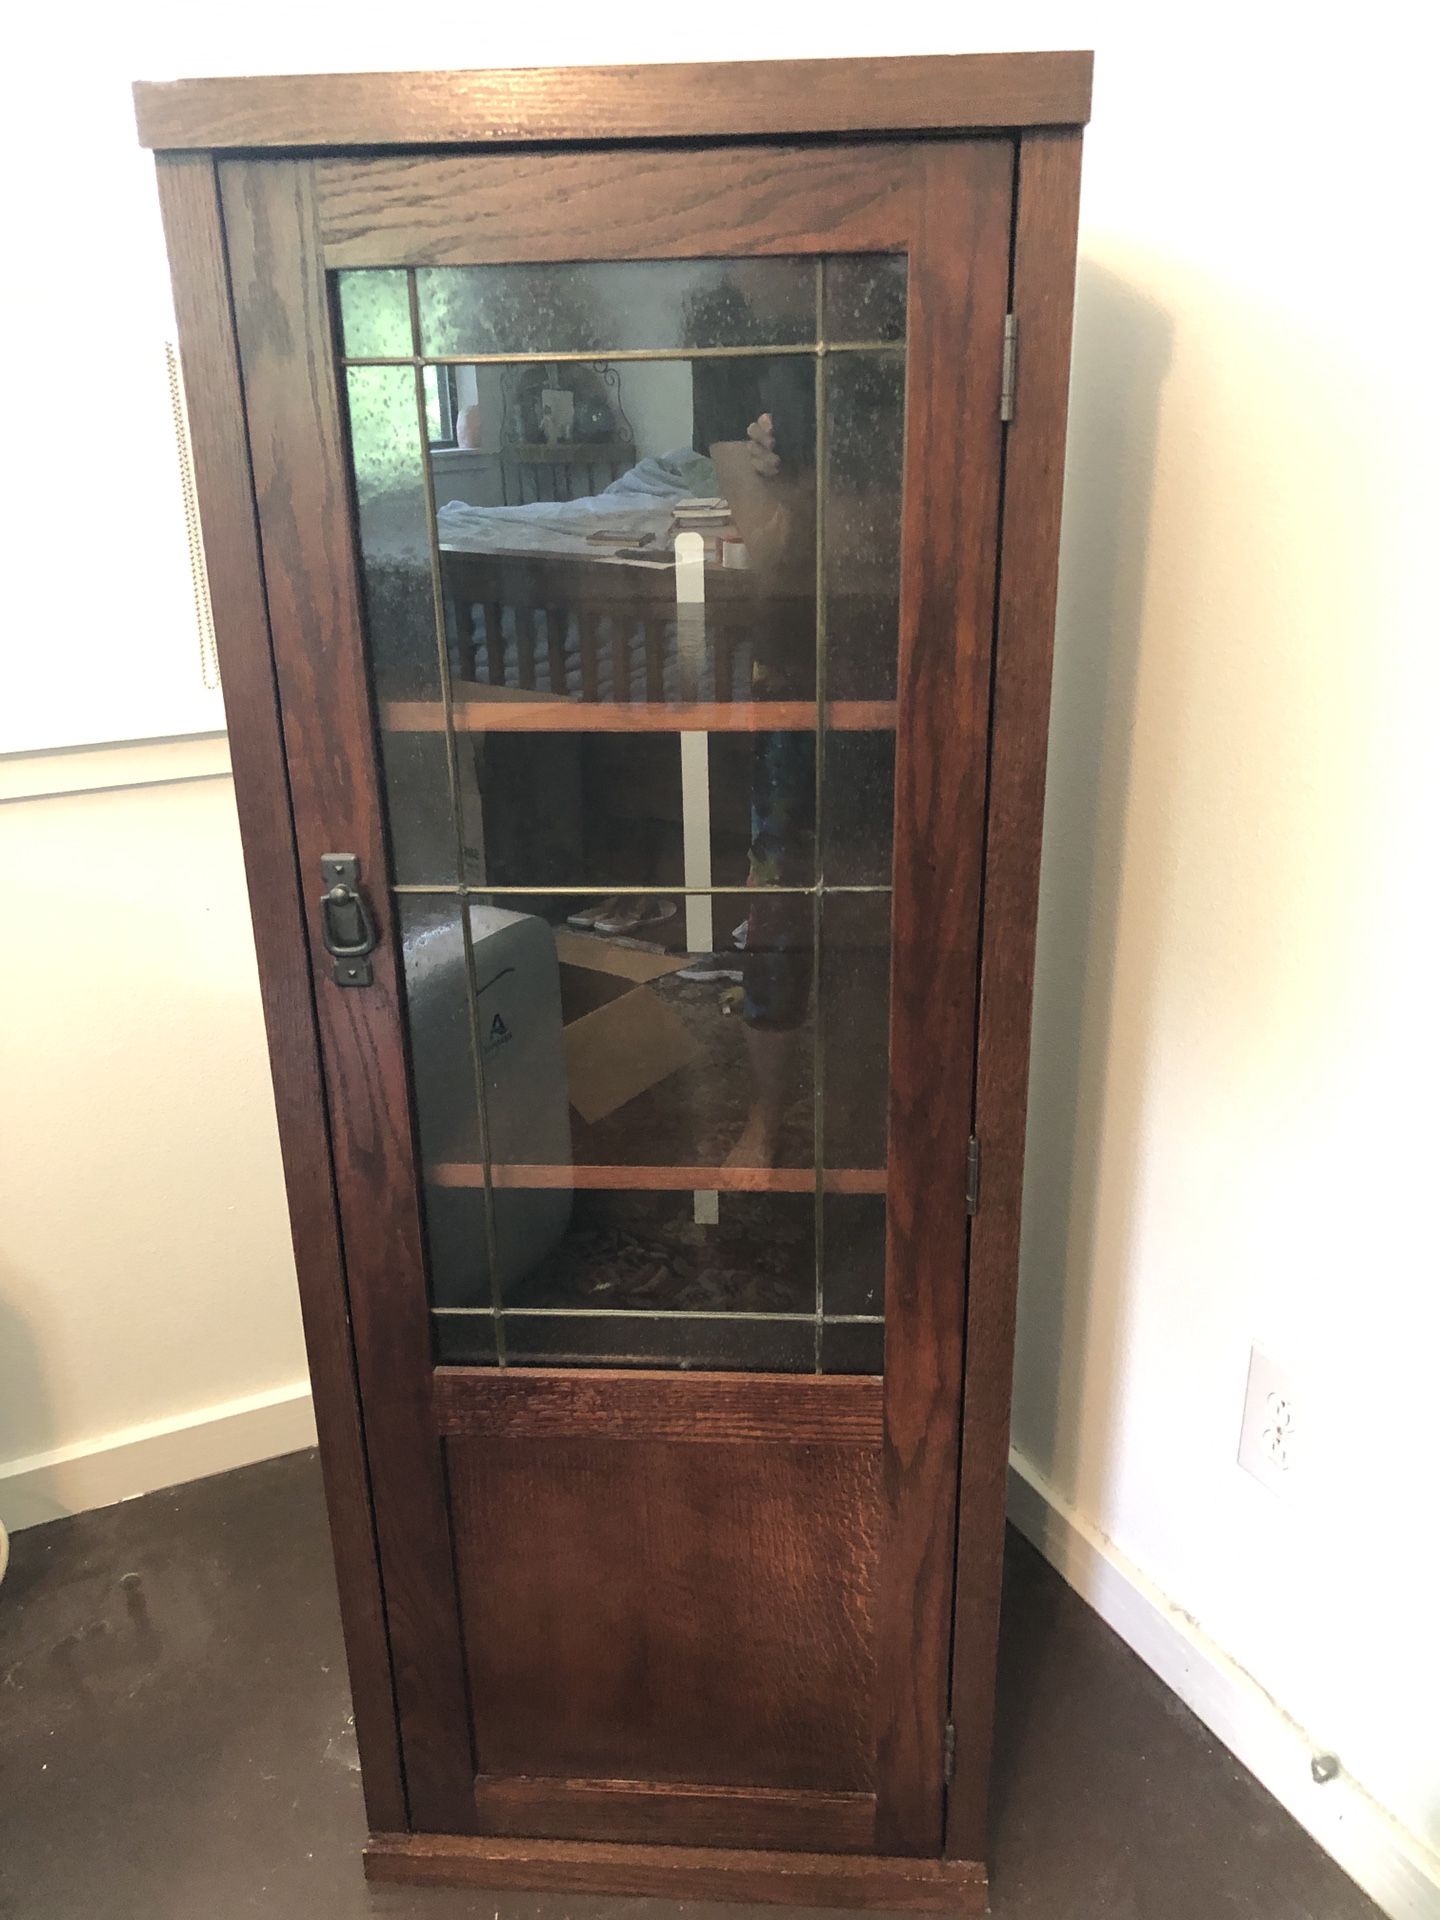 Redwood stereo cabinet. Solid wood, 3 shelves, metal/glass panels in door